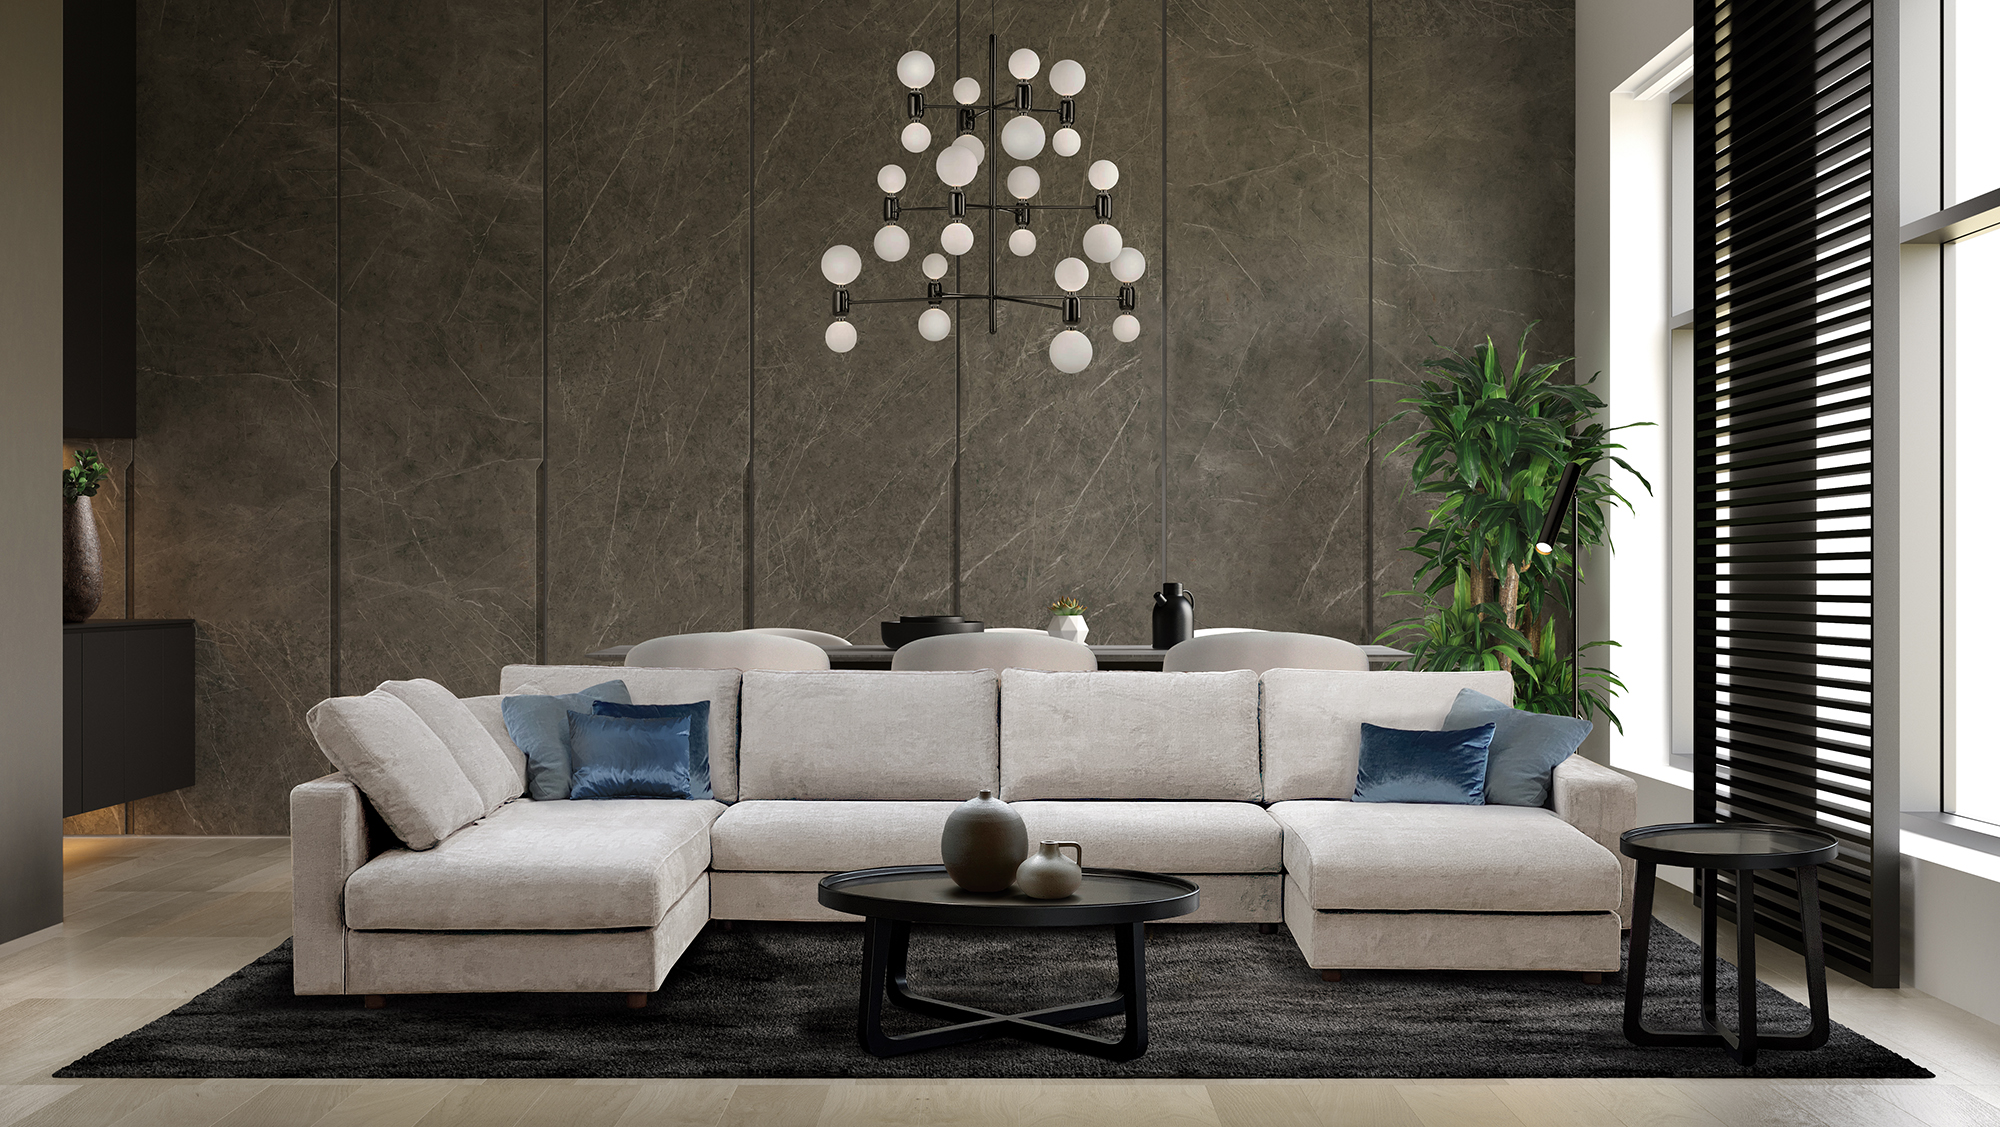 Minimalist Interior of modern living room 3 D rendering